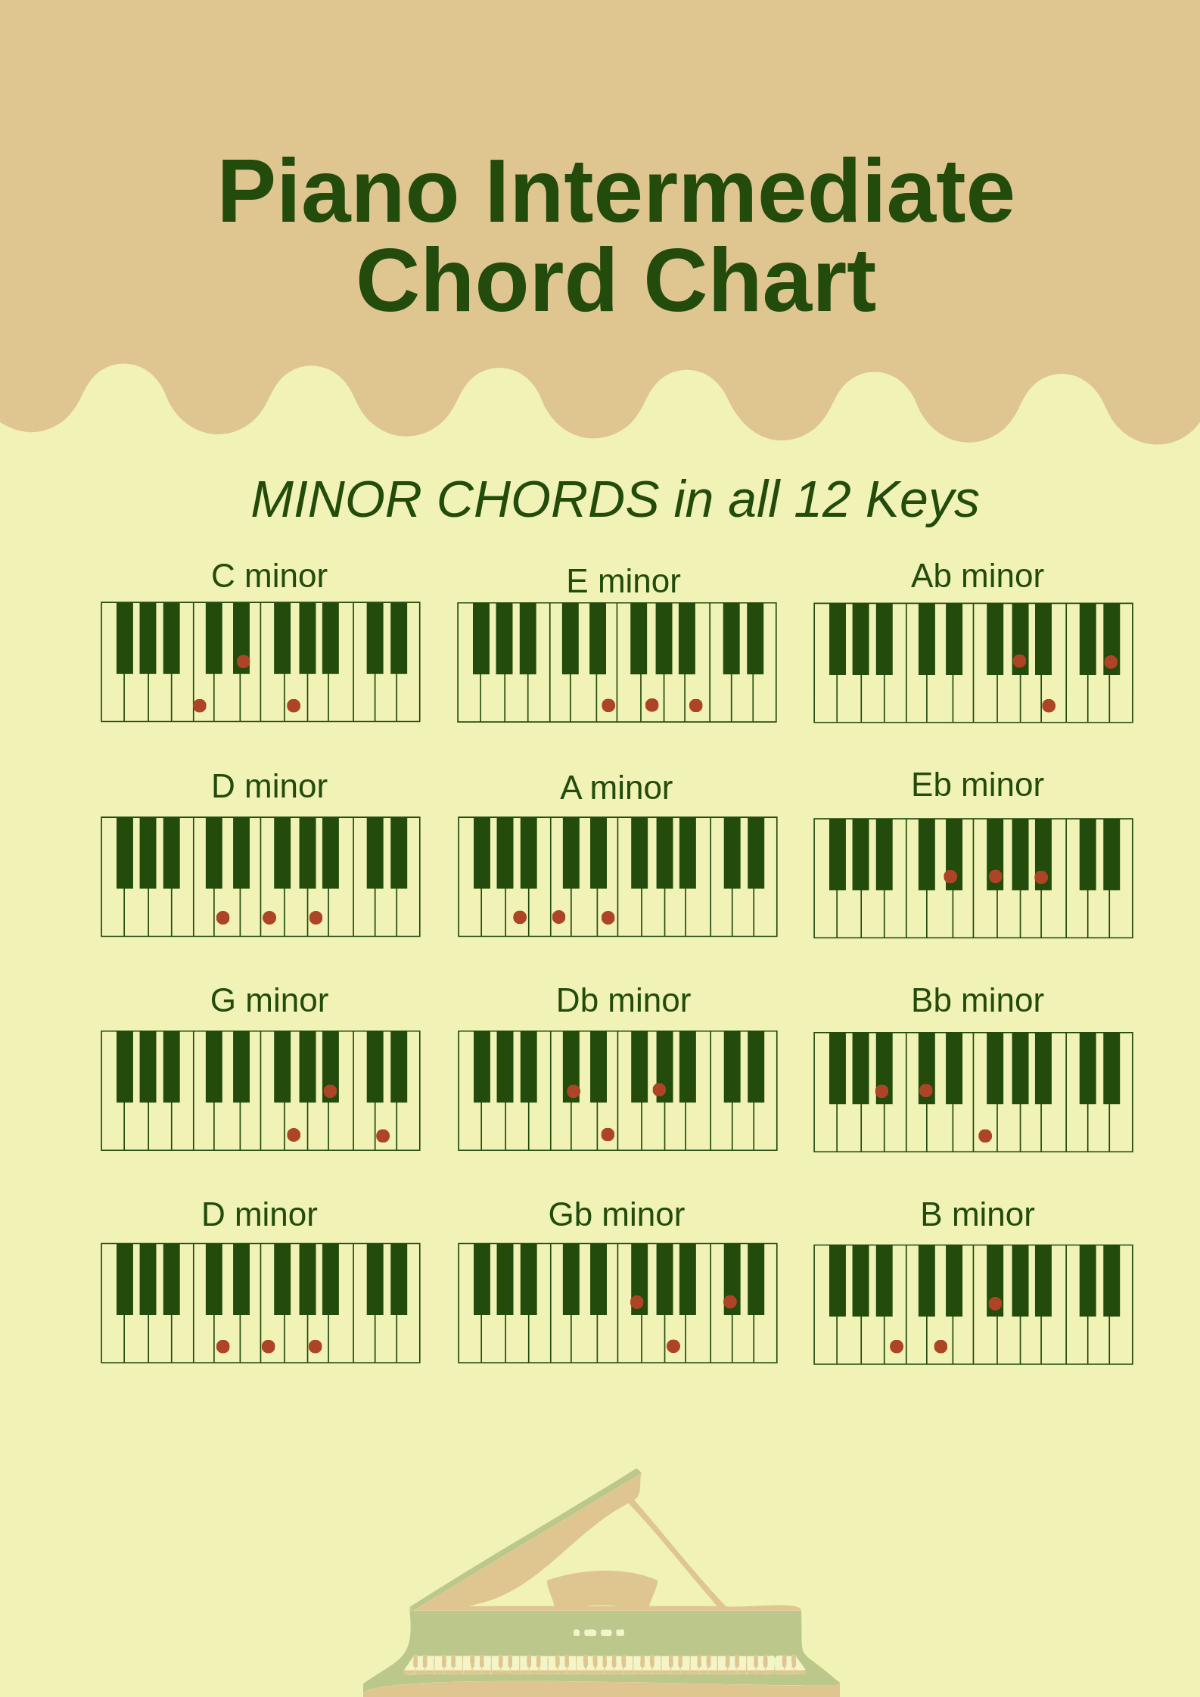 Piano Intermediate Chord Chart Template